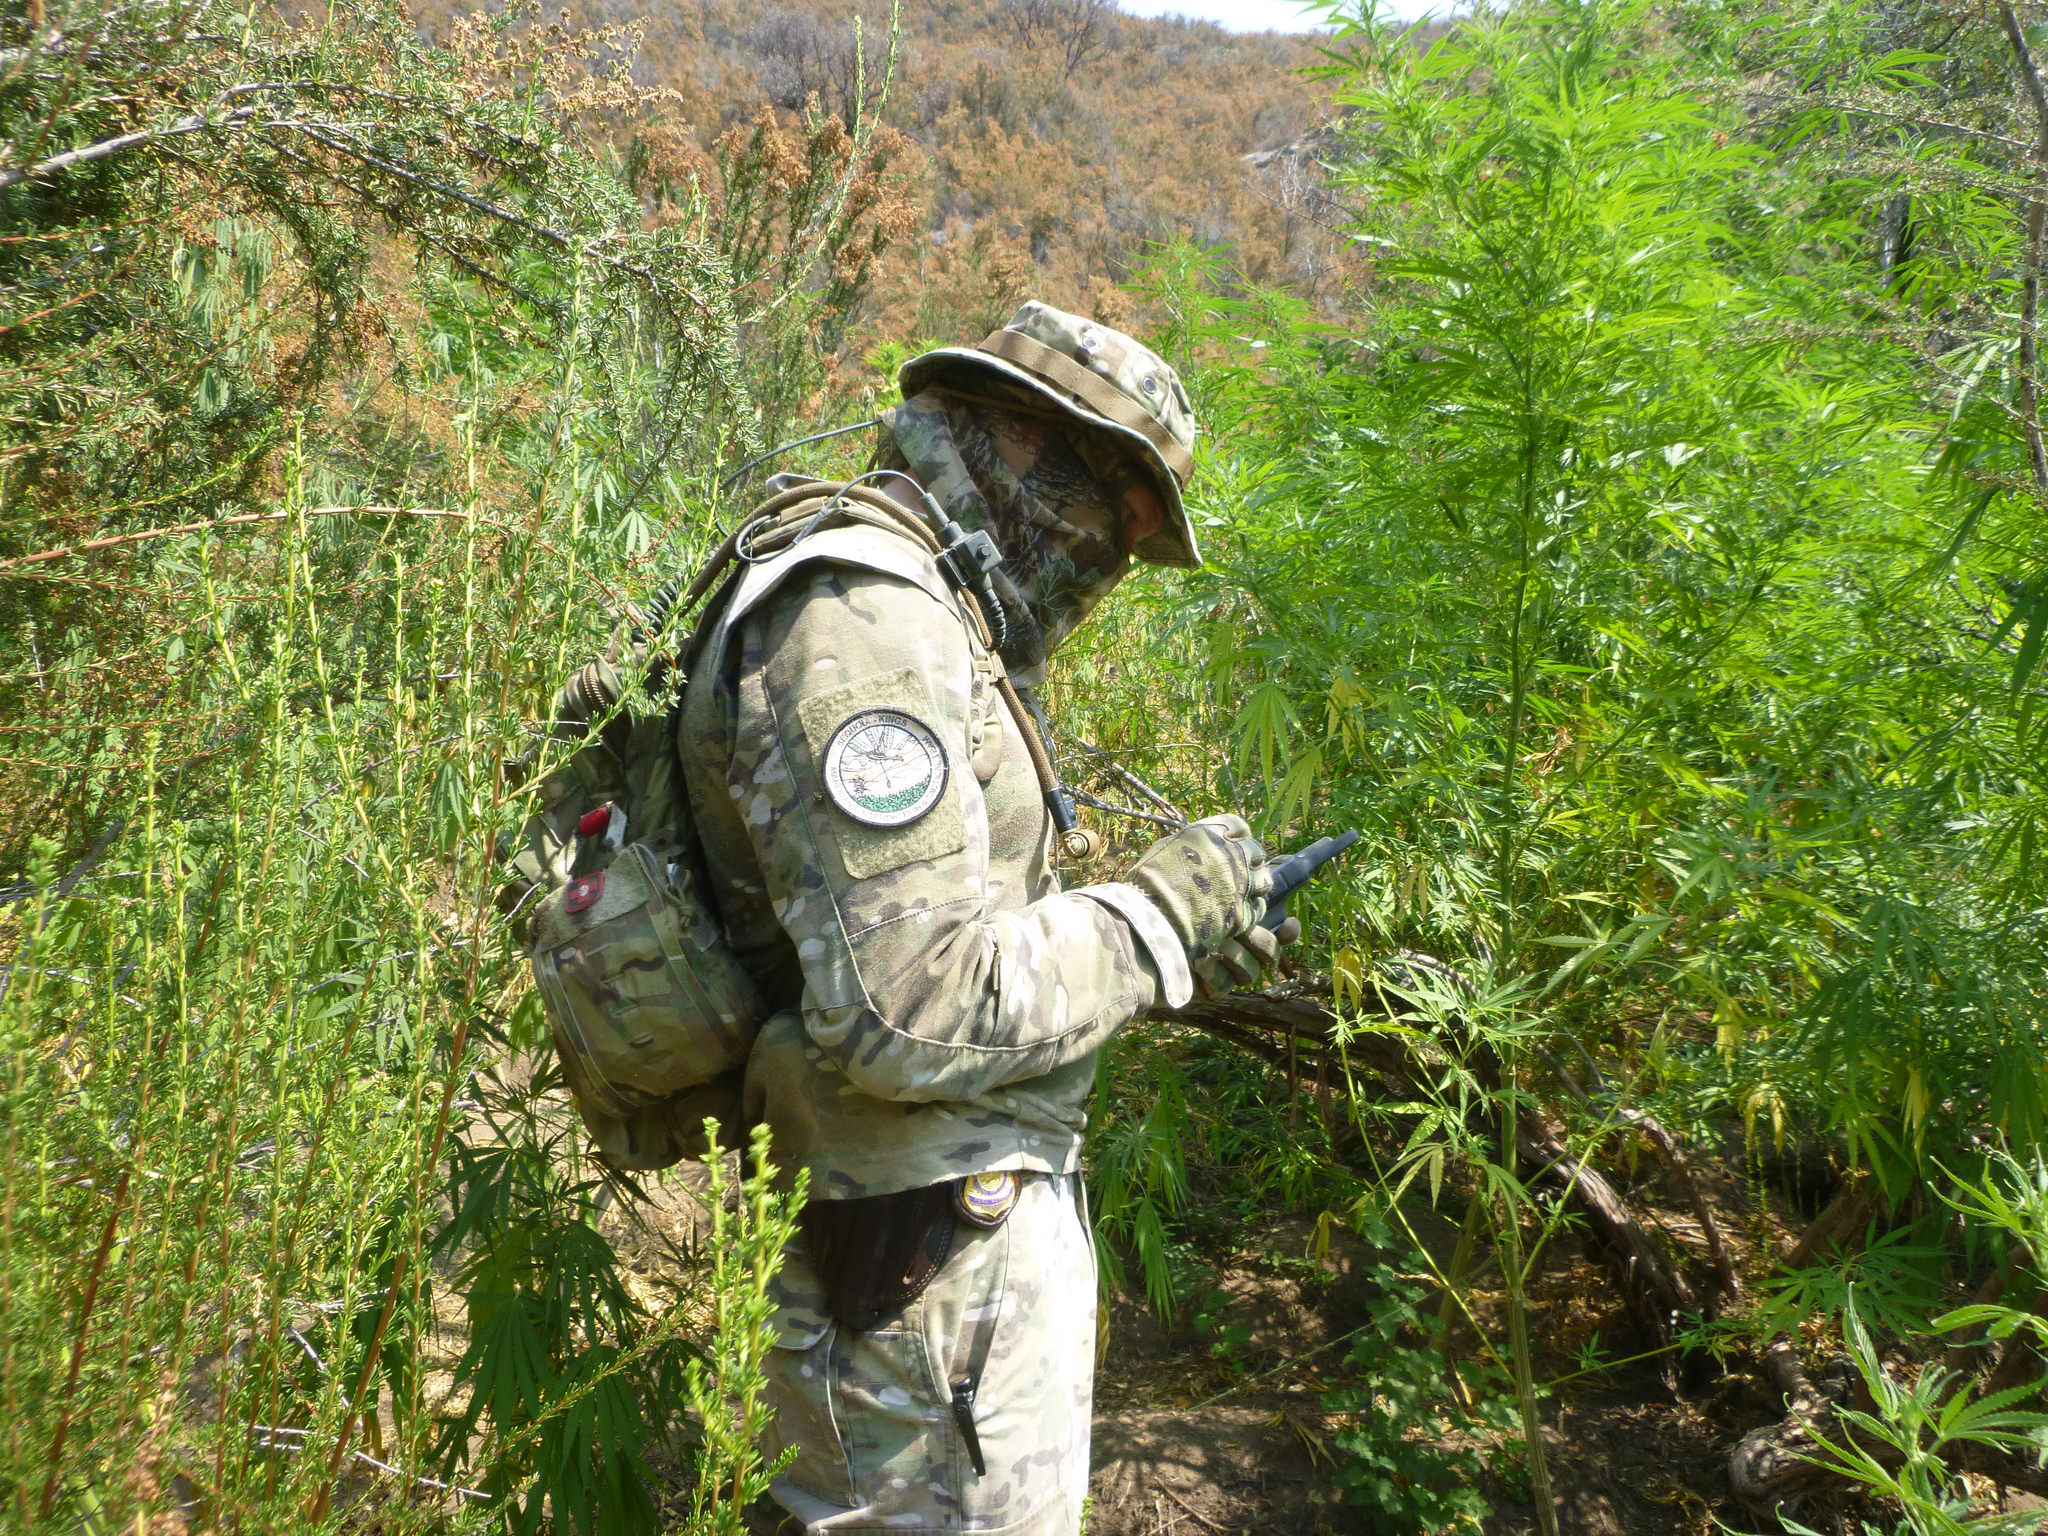 A ranger taking notes at a marijuana grow site